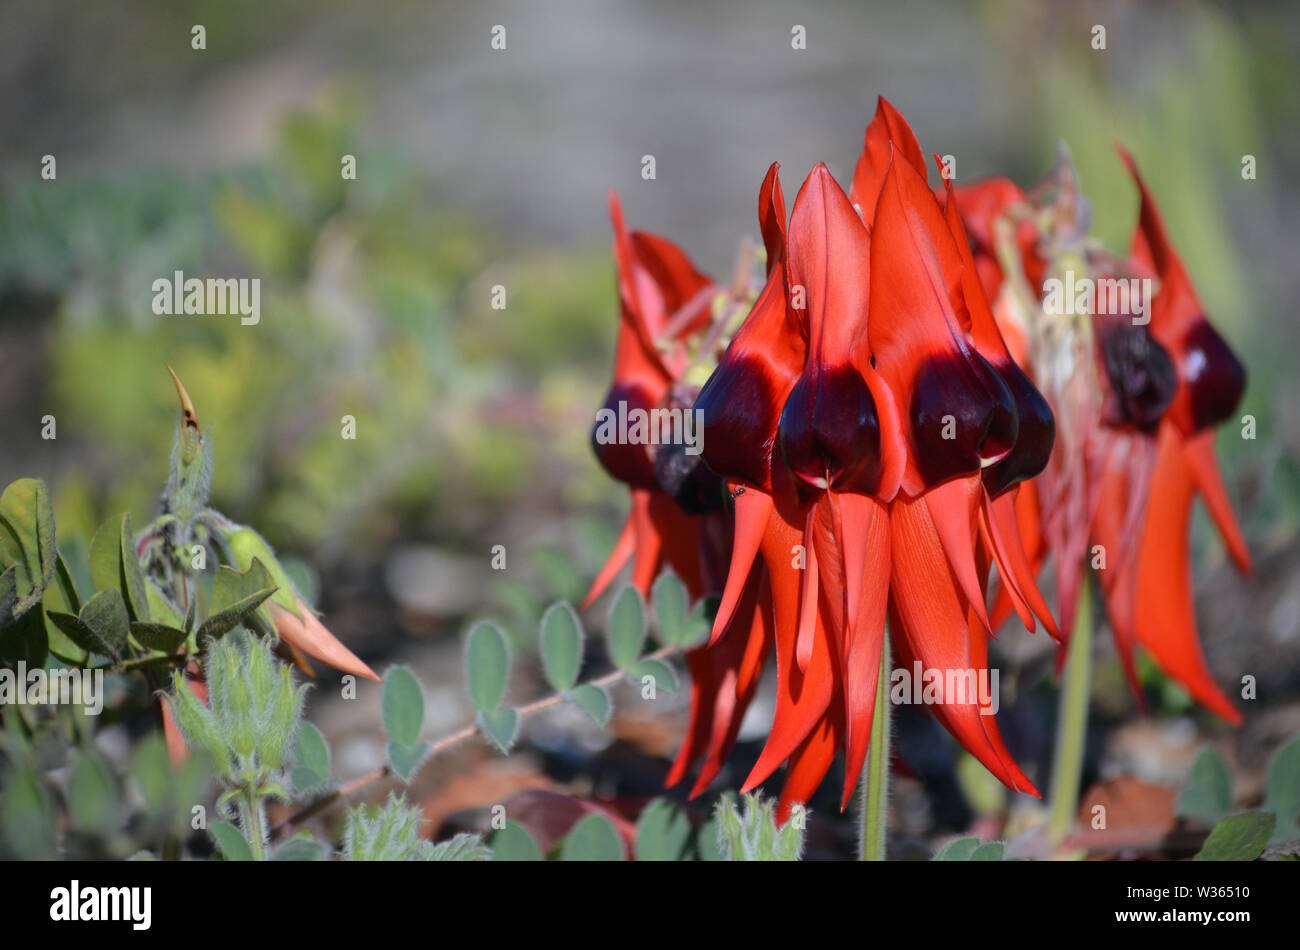 Australian native Sturts Desert Pea flowers, Swainsona formosa, family Fabaceae. Floral emblem of South Australia. Stock Photo